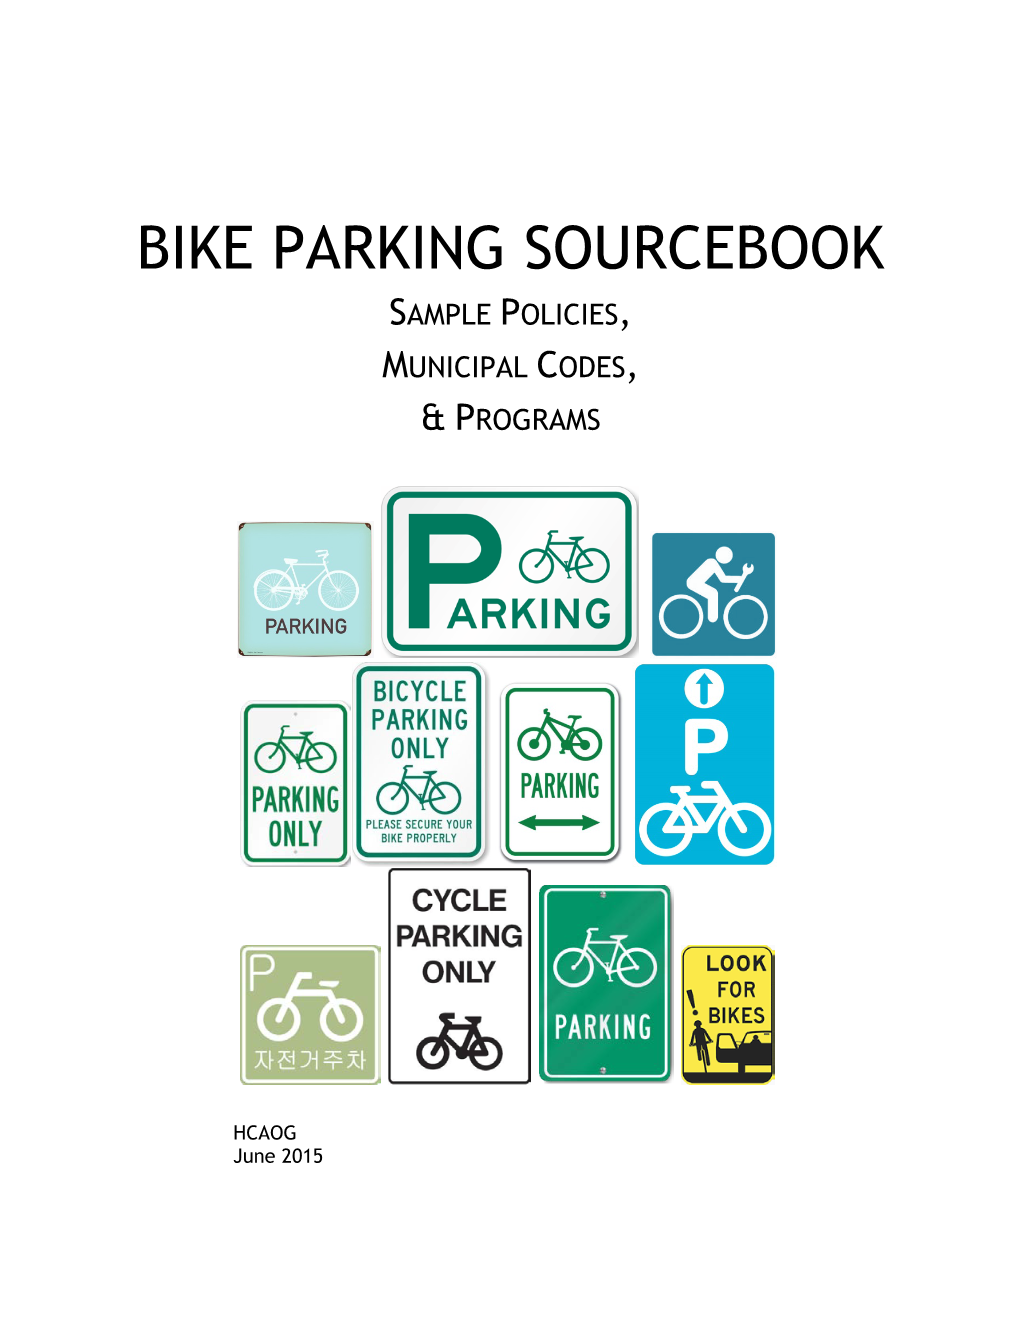 Bike Parking Sourcebook Sample Policies, Municipal Codes, & Programs